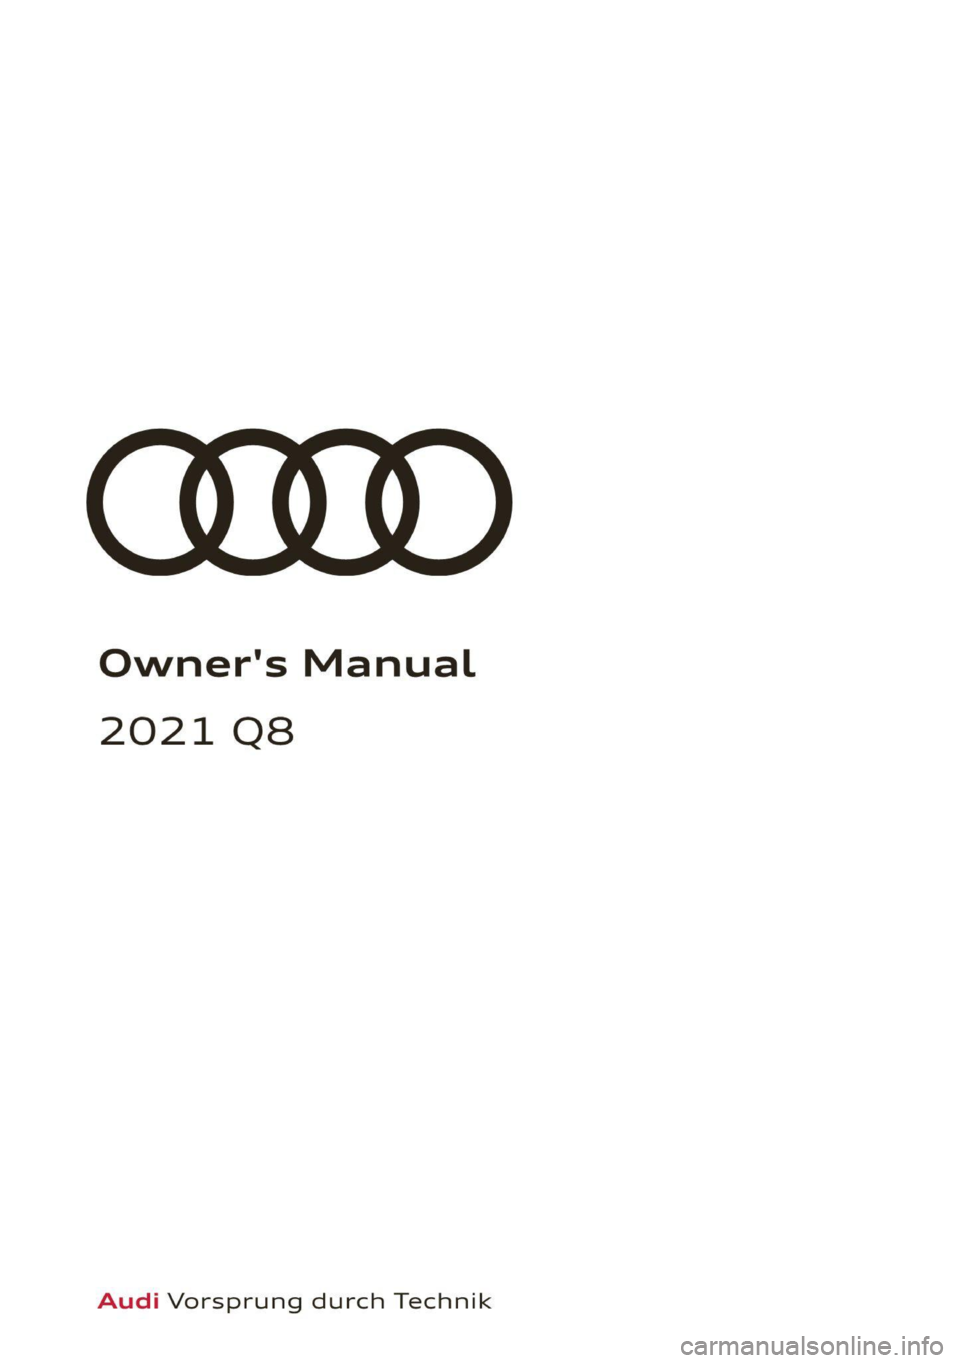 AUDI Q8 2021  Owner´s Manual Owner's Manual 
2021 Q8 
Audi Vorsprung durch Technik  